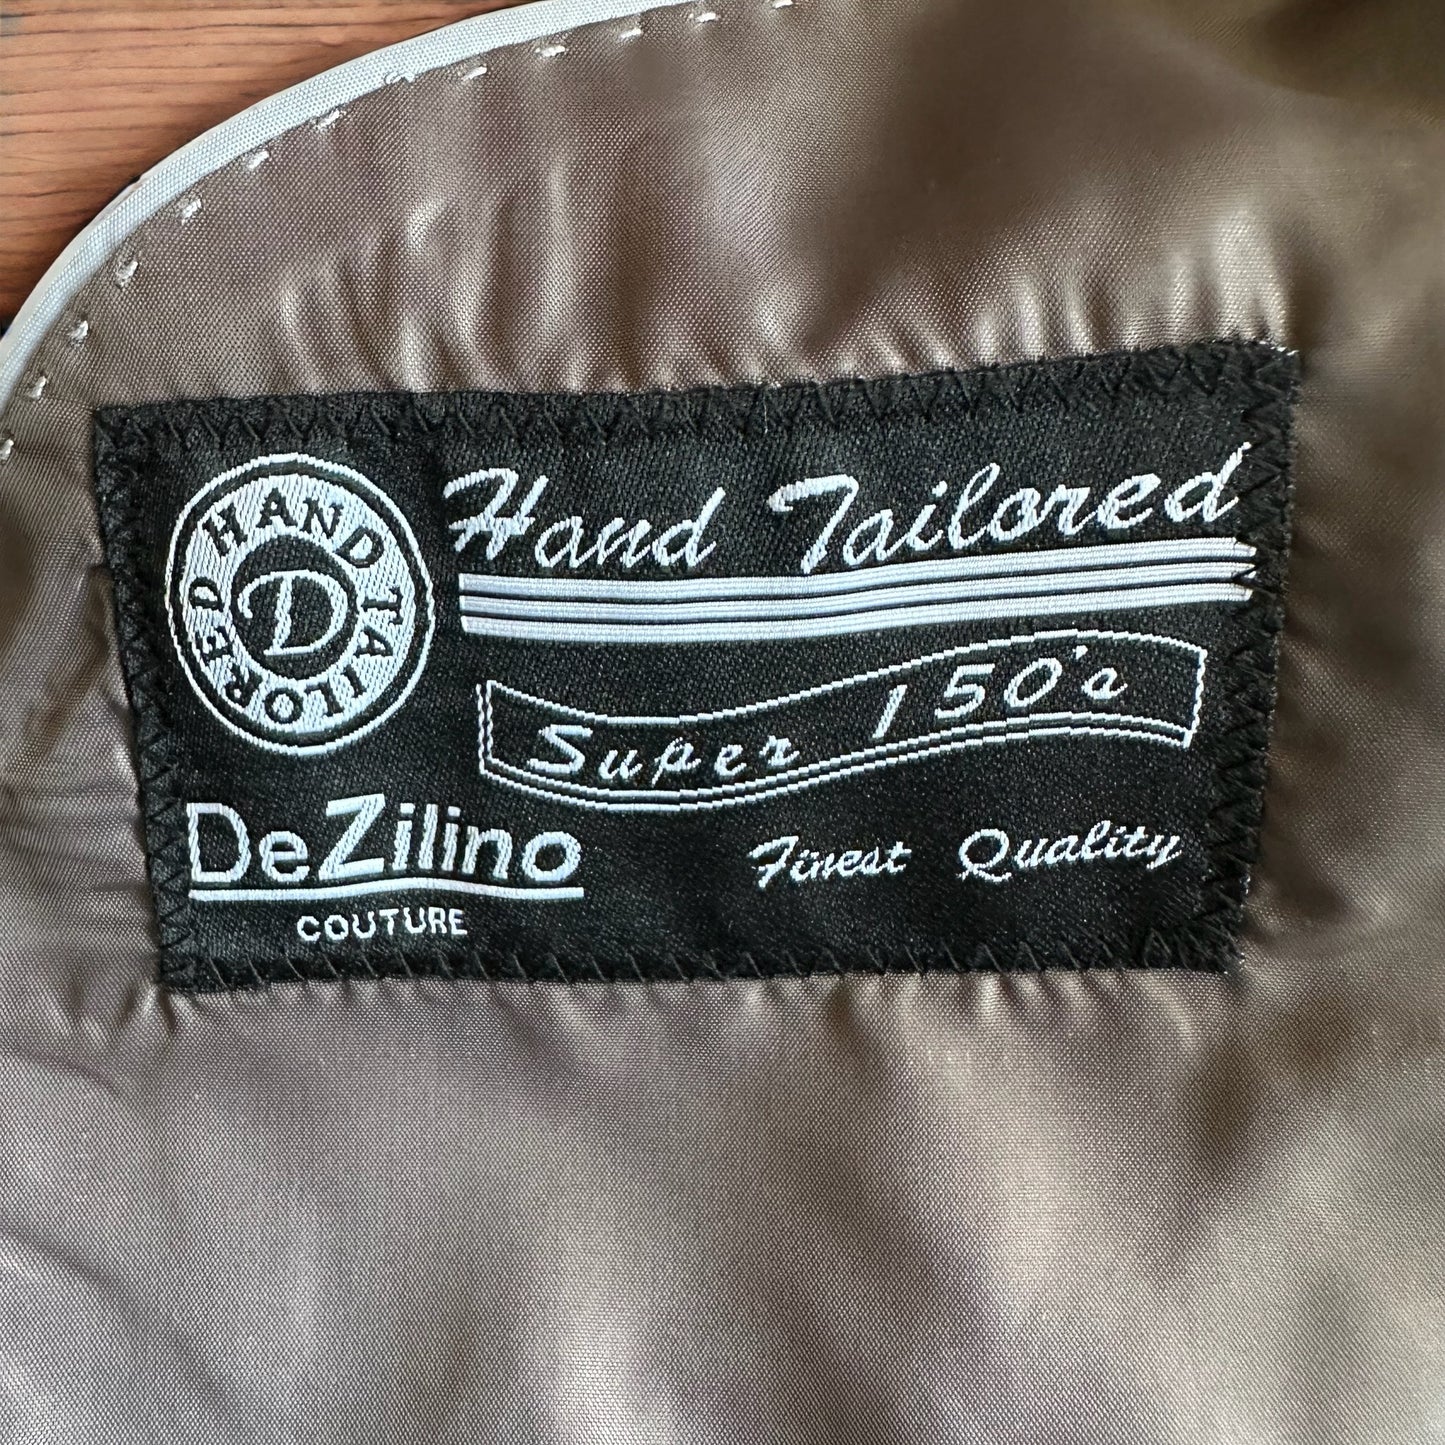 HAND TAILORED Three-Piece DeZilino Couture Men's Dress Suit, 48R/42W